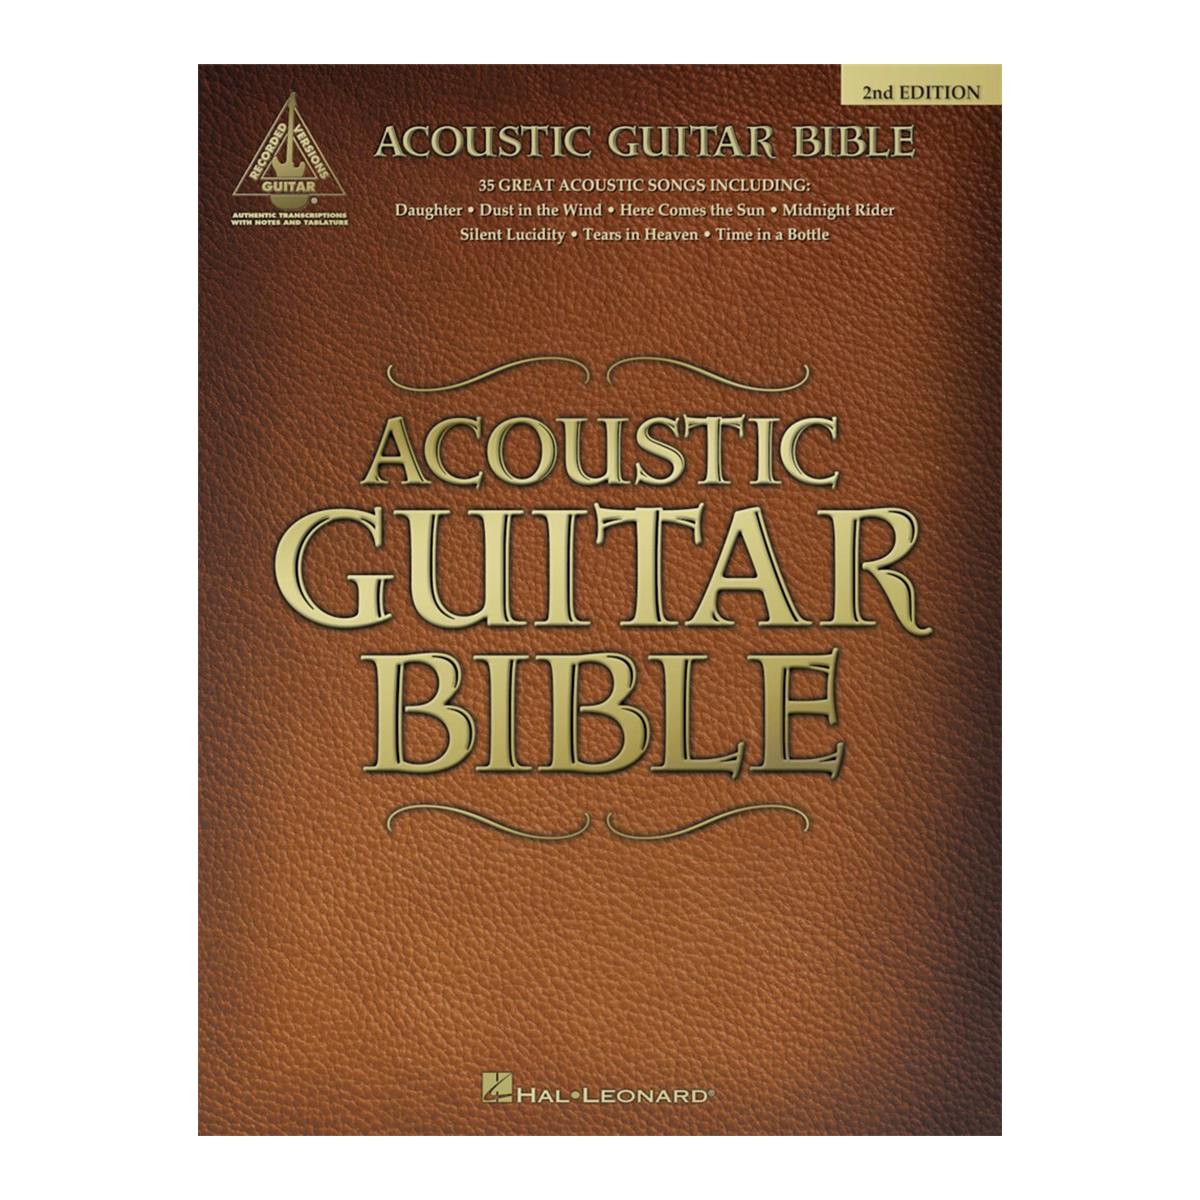 ACOUSTIC GUITAR BIBLE